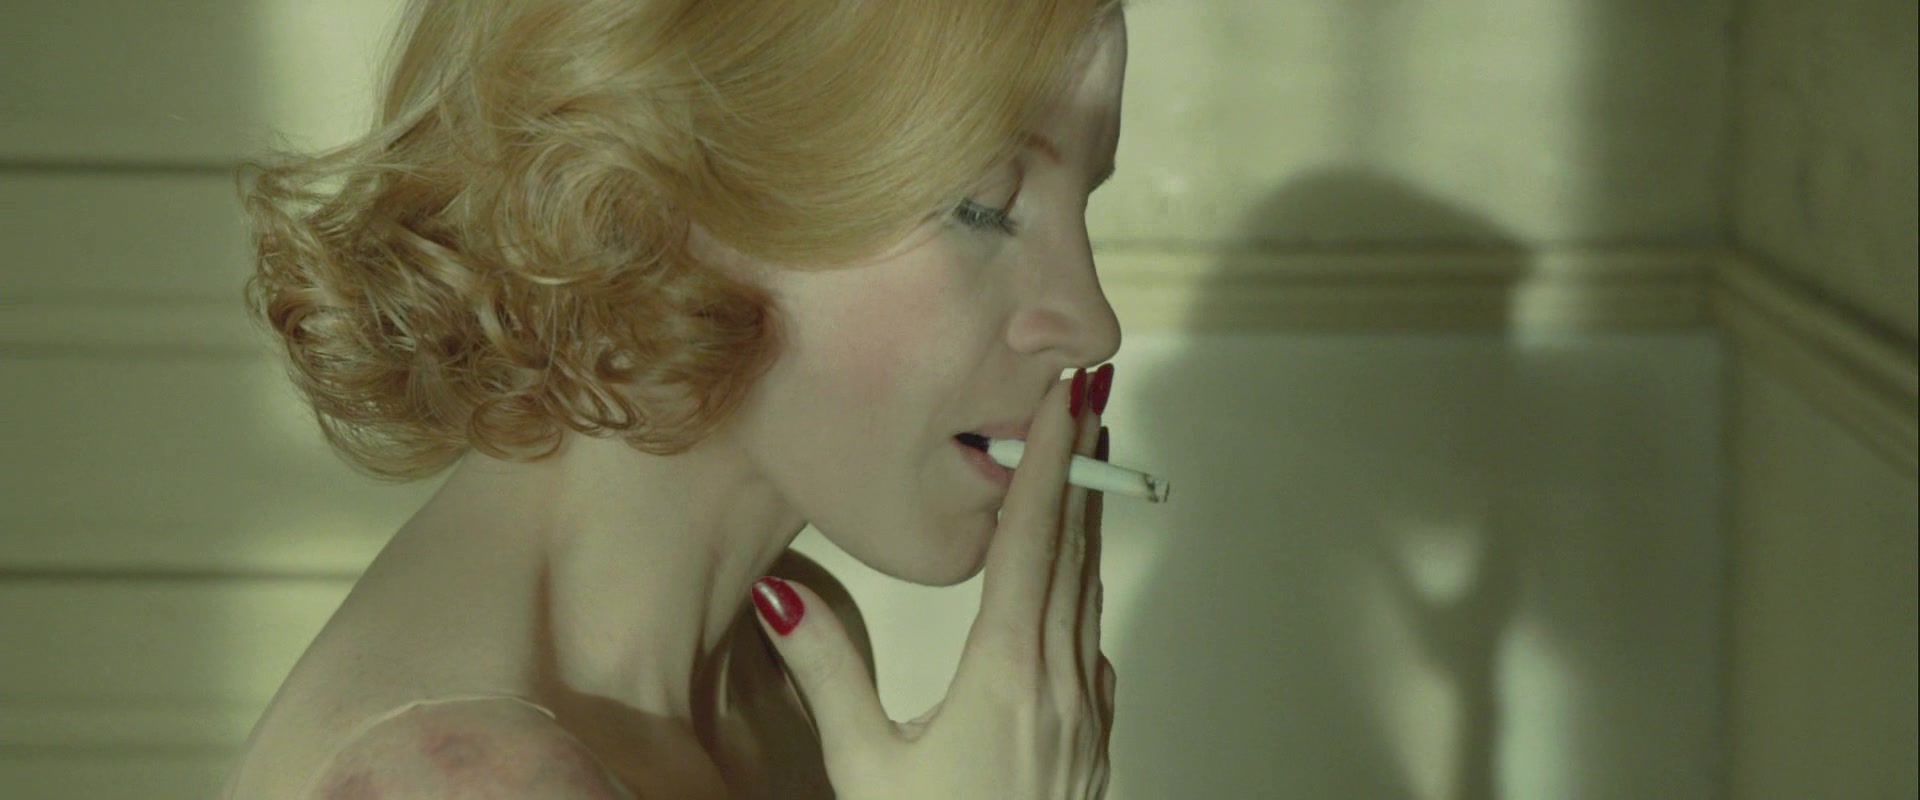 Jessica Chastain, Mia Wasikowska - Lawless (2012) 🔥 Boobs Radar